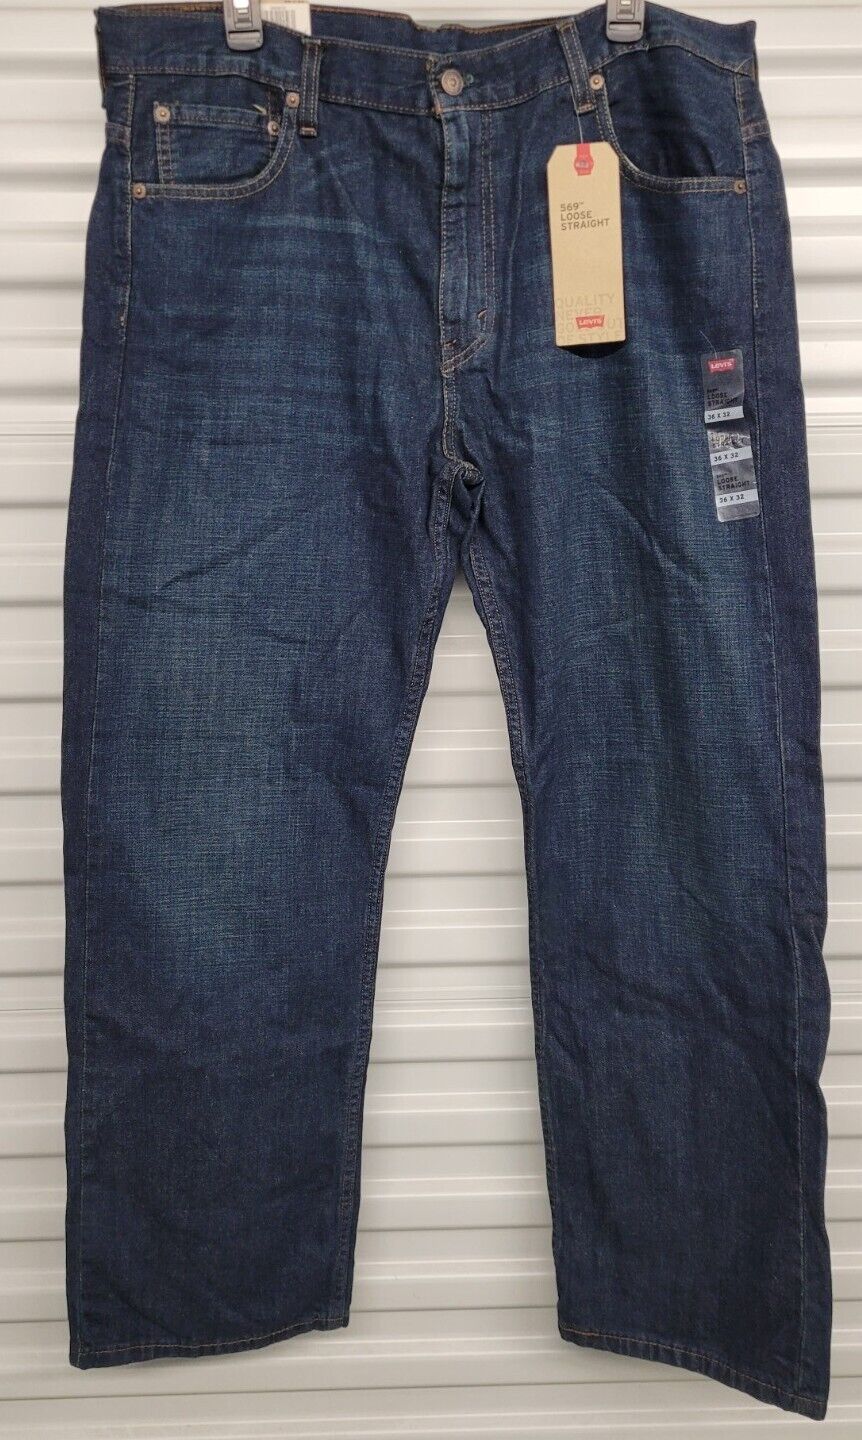 Levi's 569 Loose Straight Fit Men's Jeans in Kale 00569-0132 39307995931 |  eBay